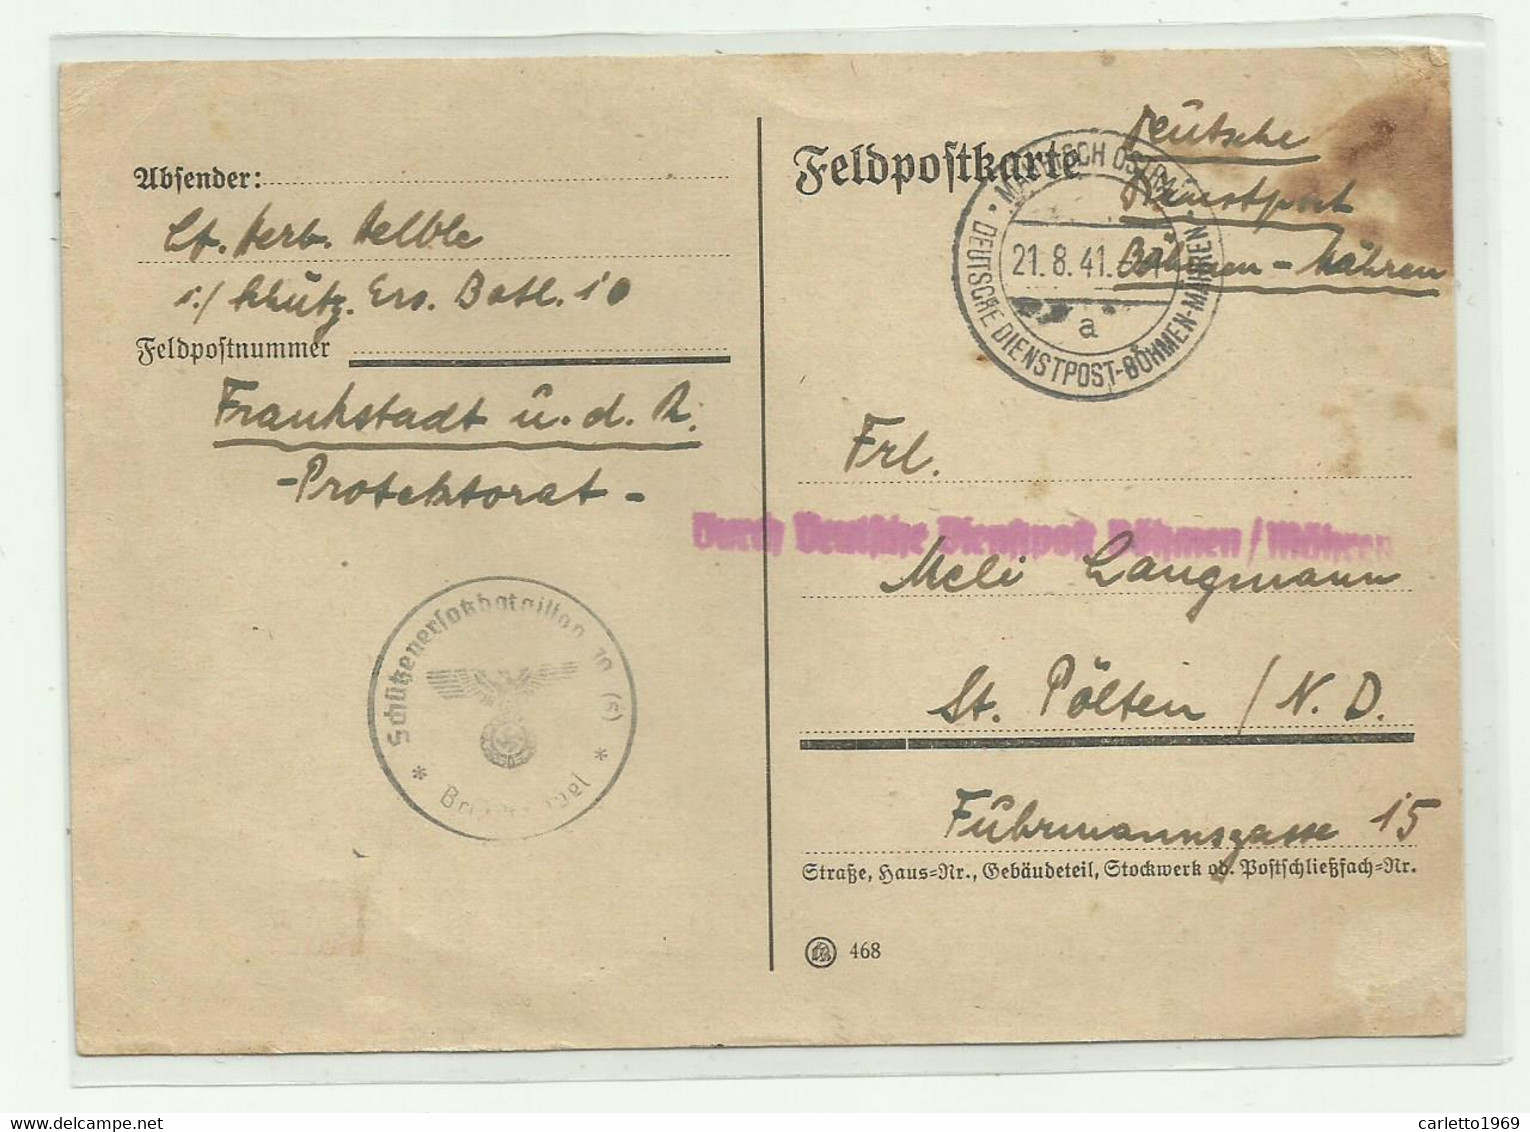 FELDPOSTKARTE FRANKSTADT UNTER DEM RADHOSCHT 1941 - Covers & Documents